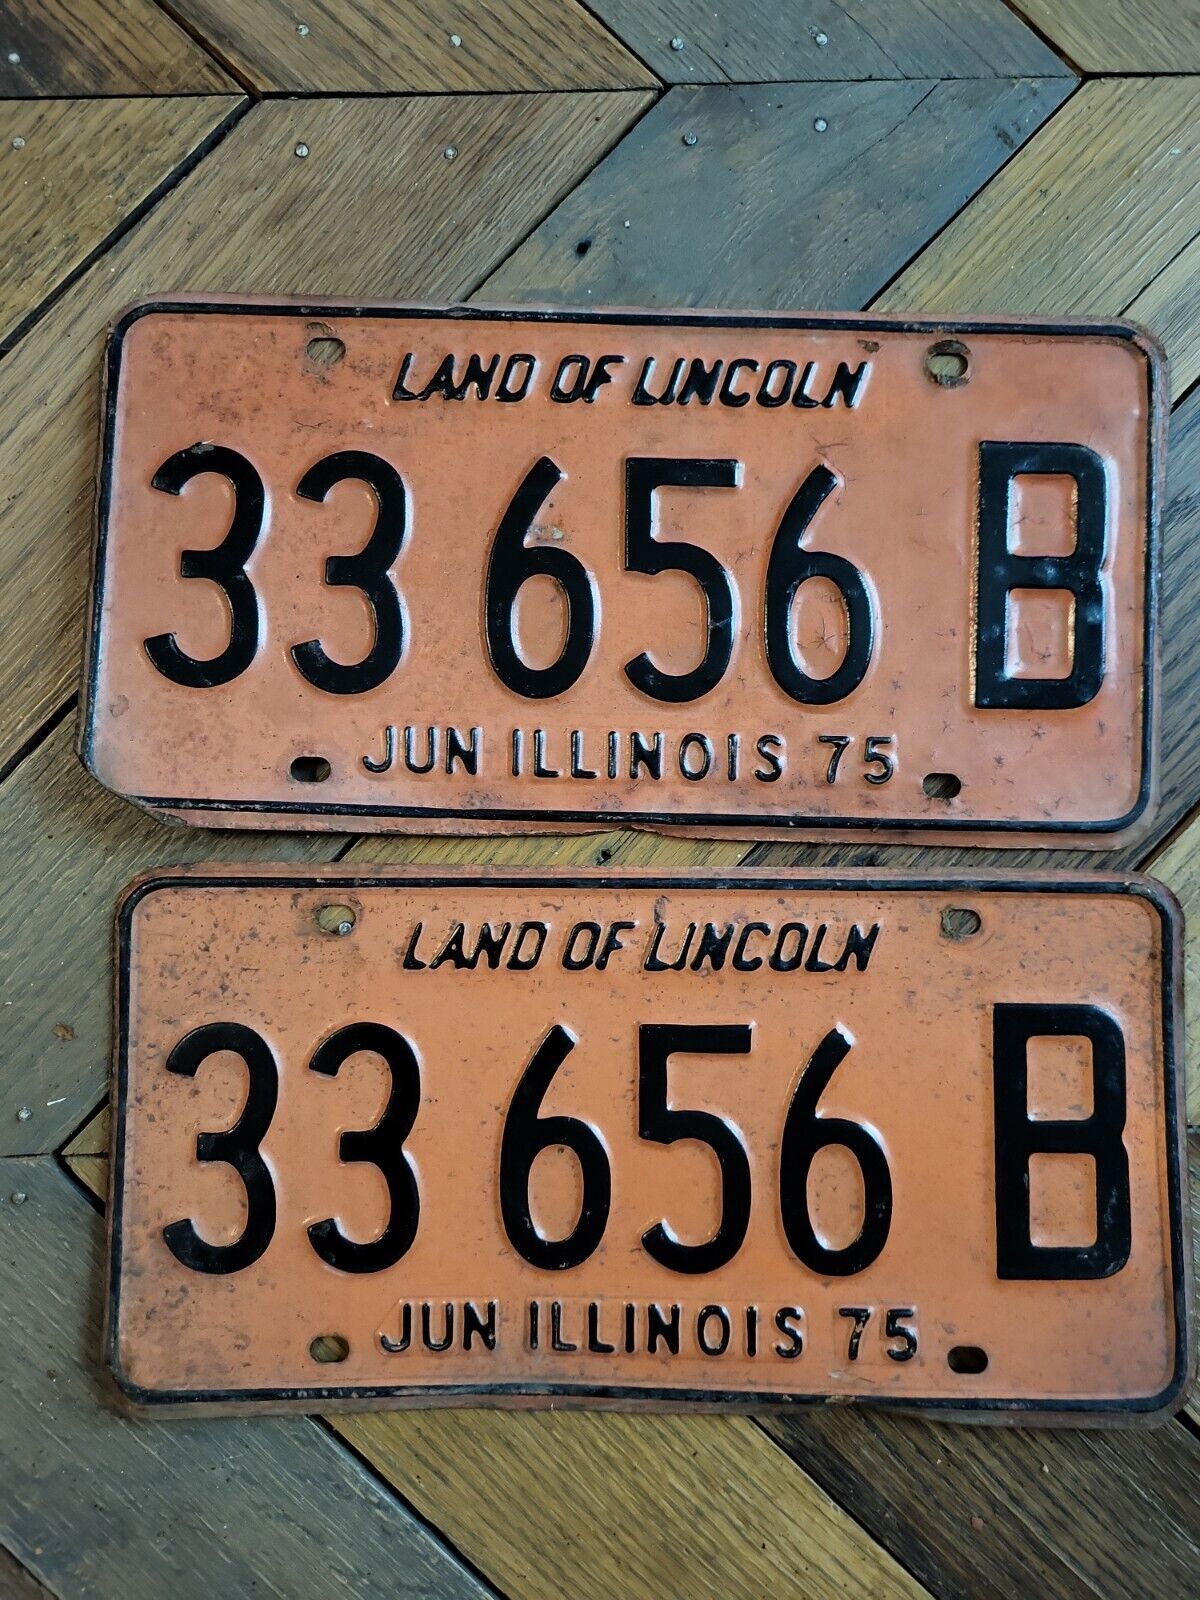 1975 Illinois License Plates Original Matched Pair # 33 656 B Vintage